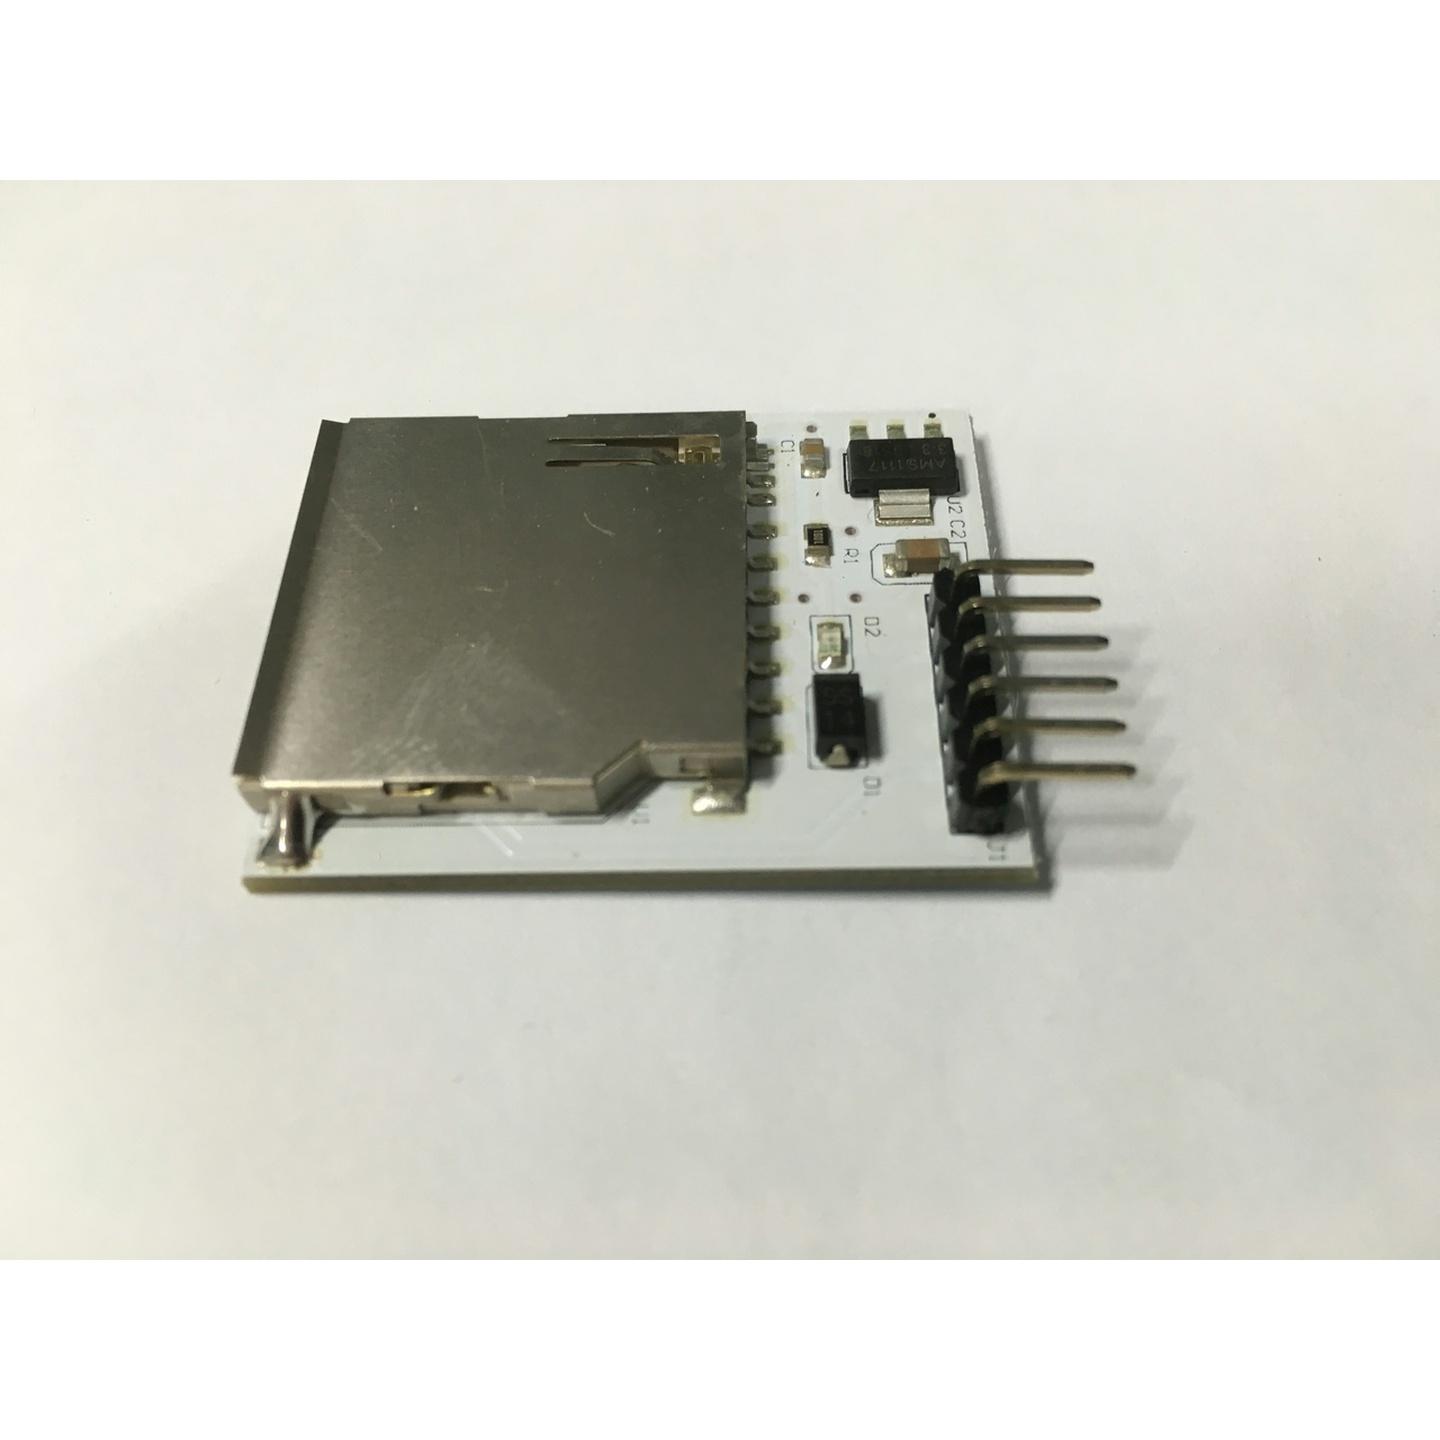 SD Card Breakout Board for Arduino